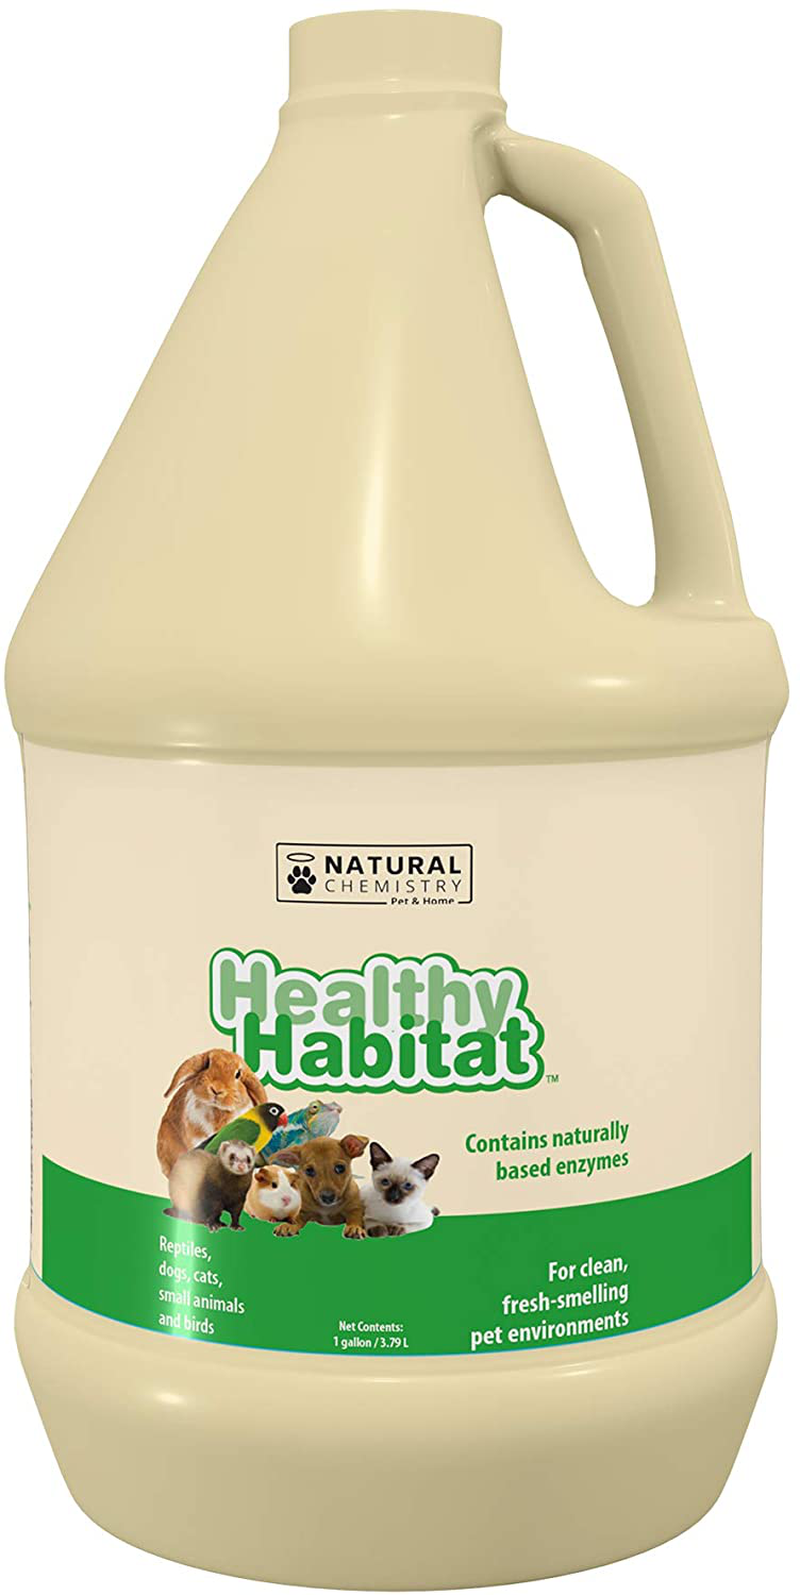 Natural Chemistry Healthy Habitat Pet Habitat Cleaner and Deodorizer, 1-Gallon